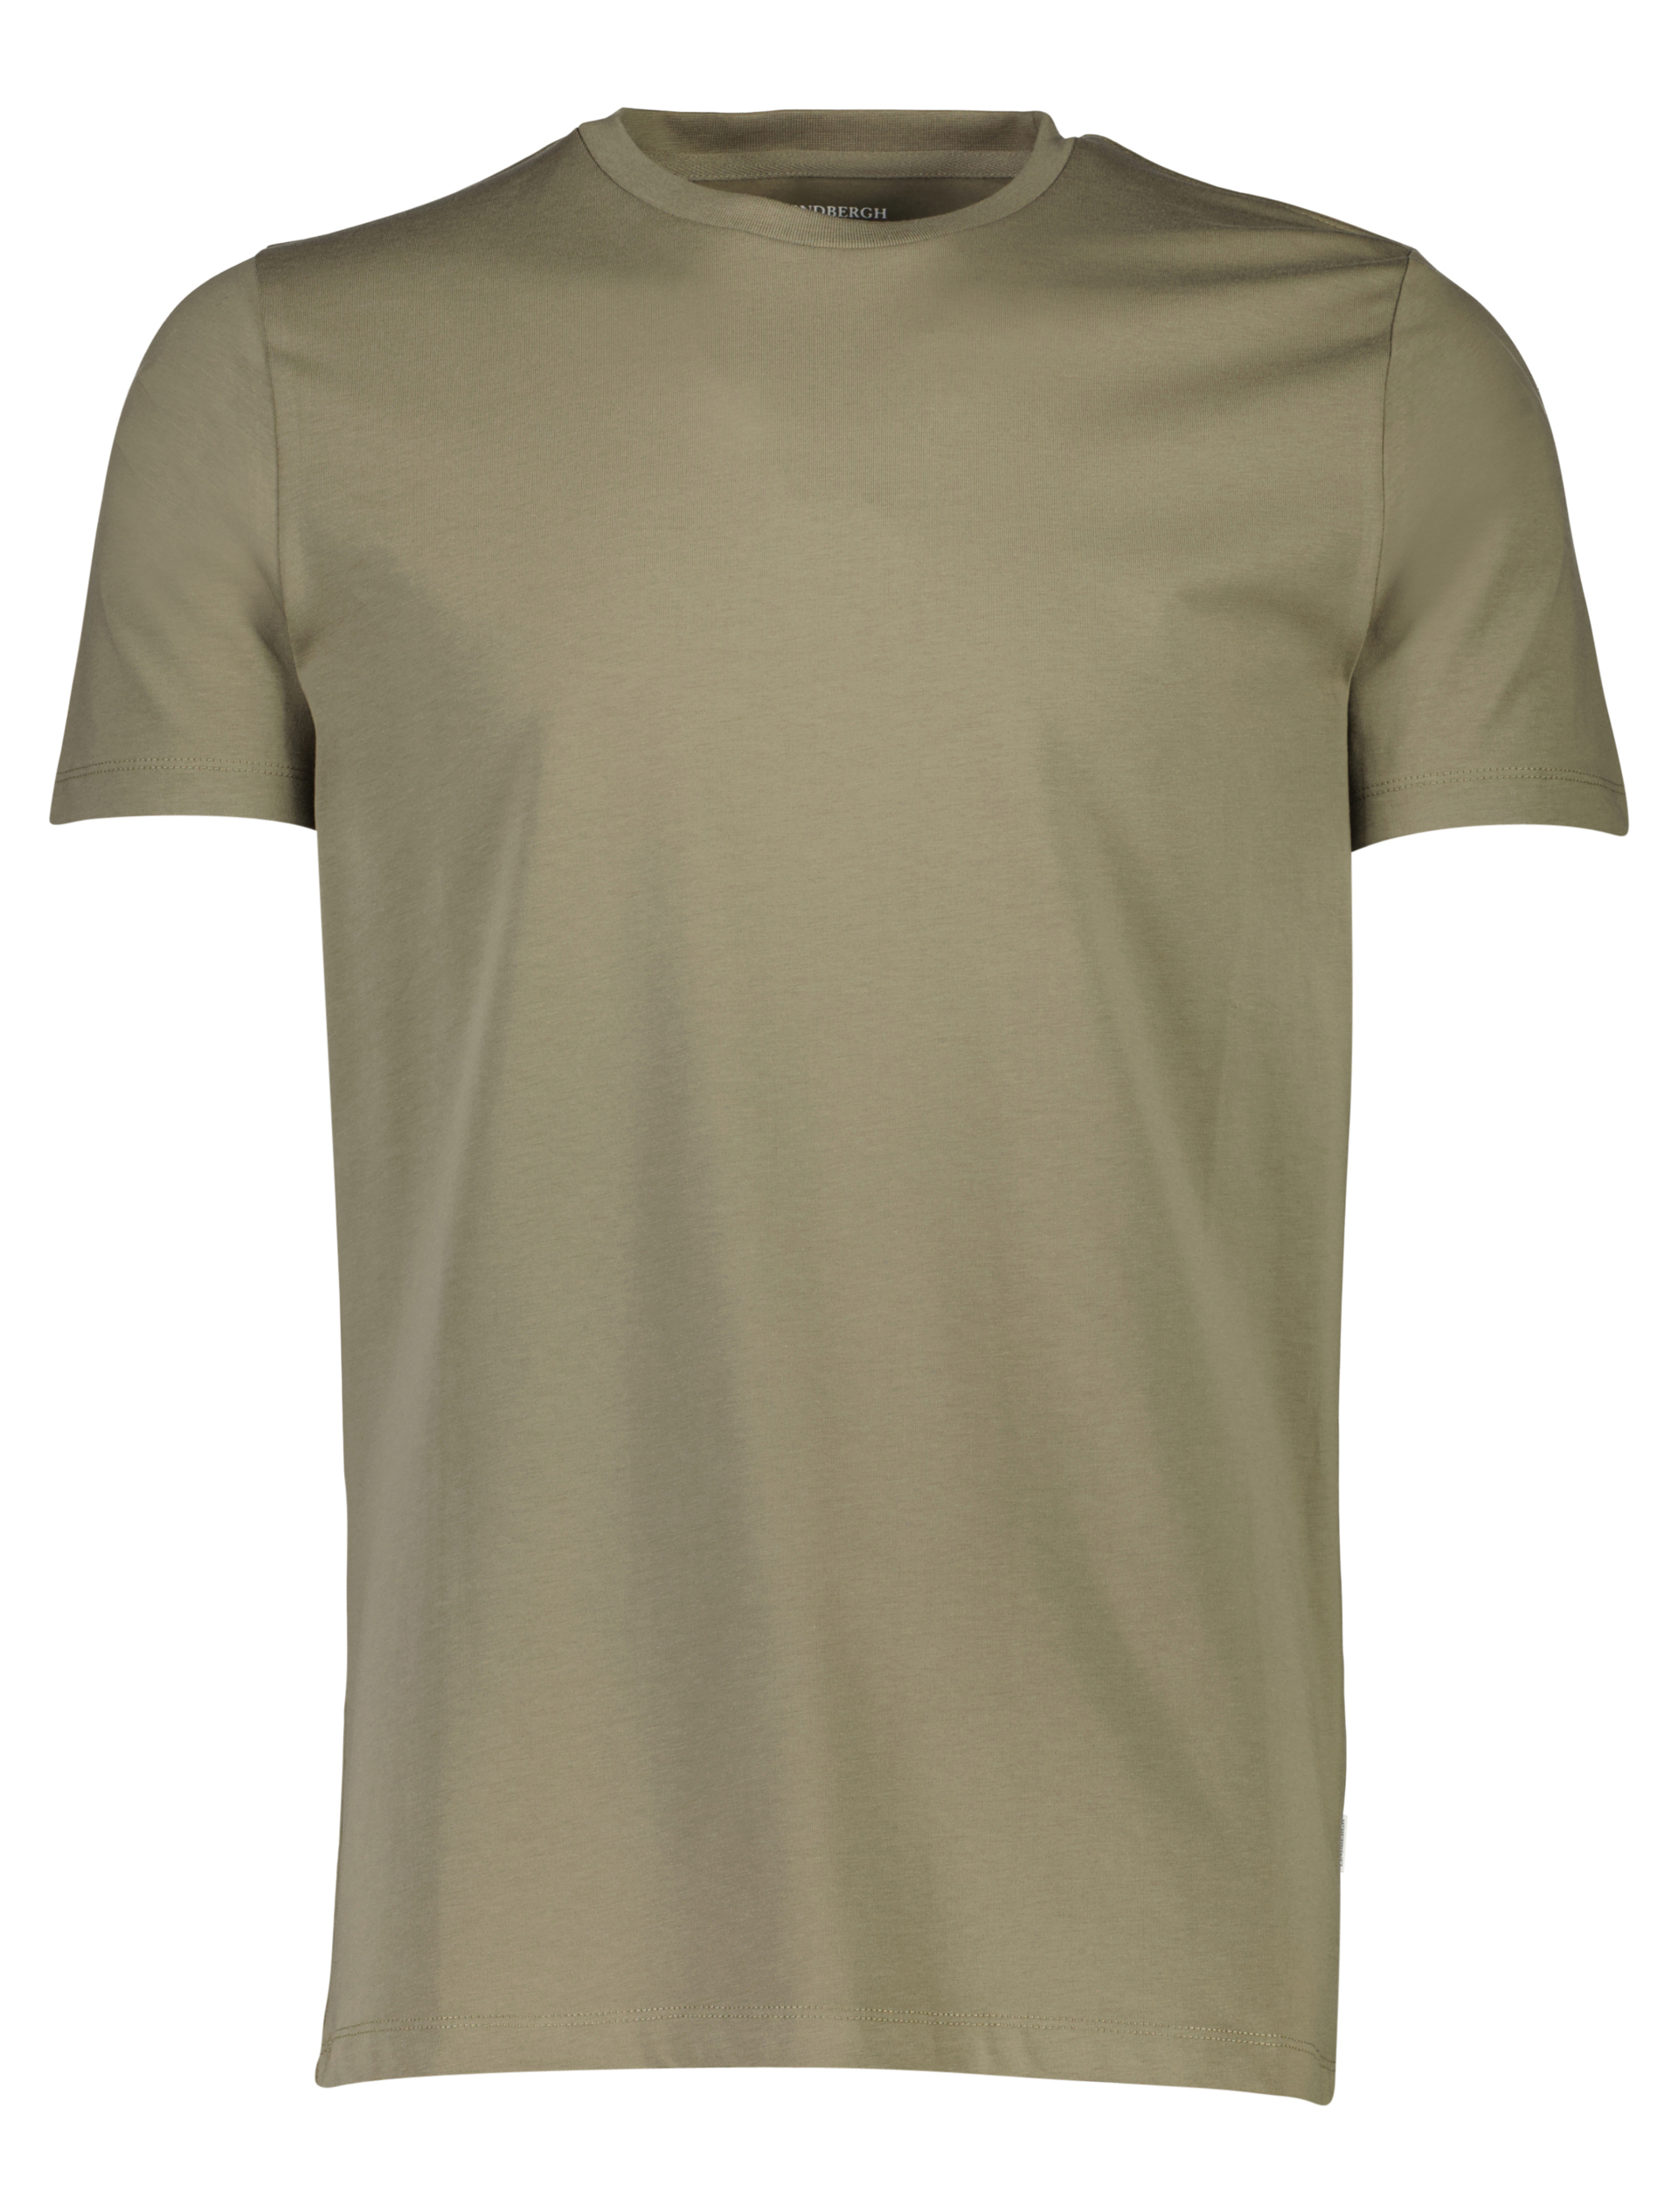 Lindbergh T-shirt groen / lt army